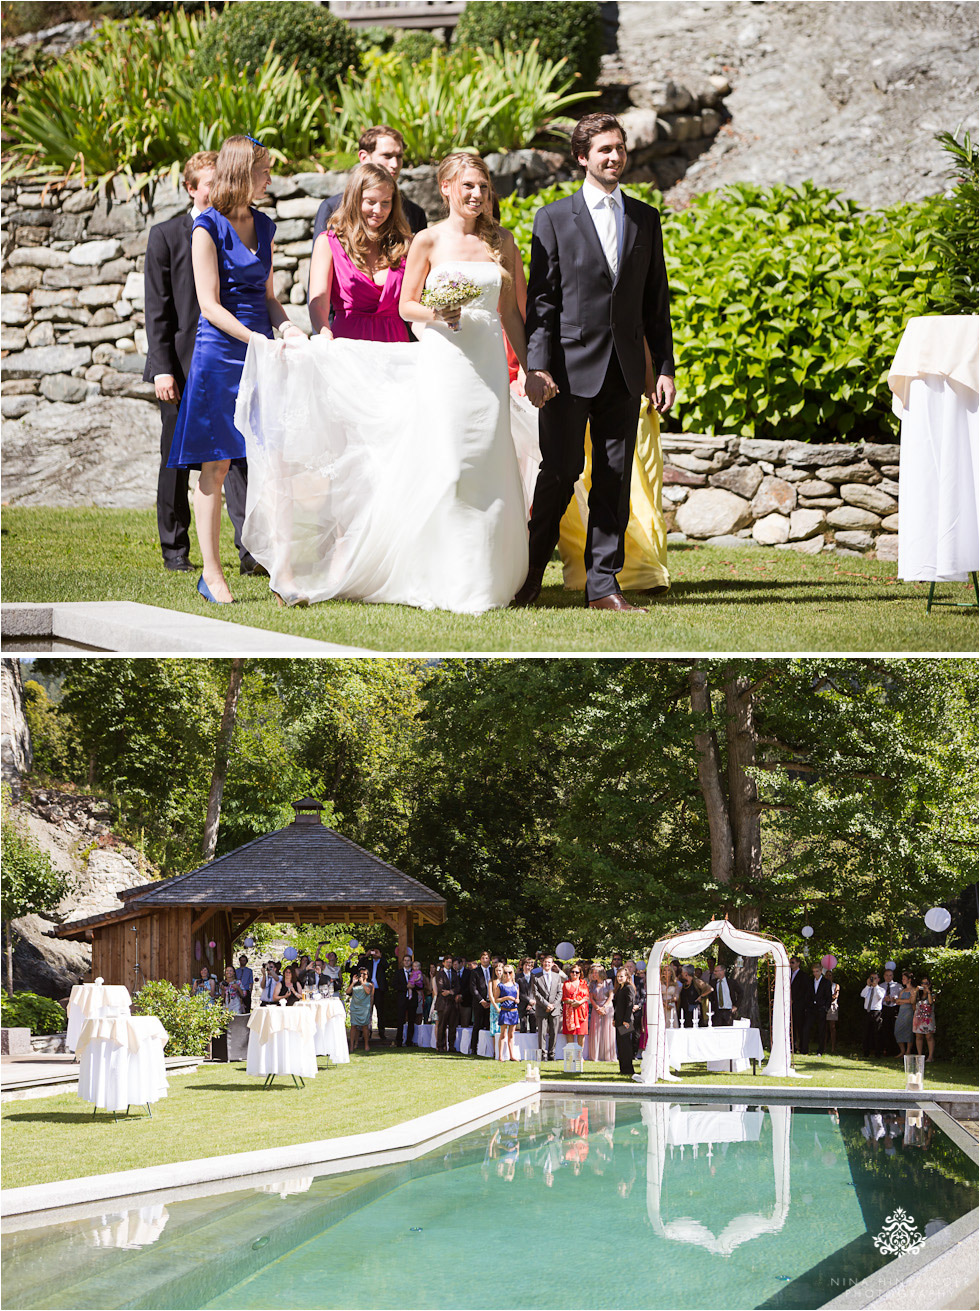 A Belgian wedding at Schloss Friedberg | Maja & Nico - Blog of Nina Hintringer Photography - Wedding Photography, Wedding Reportage and Destination Weddings